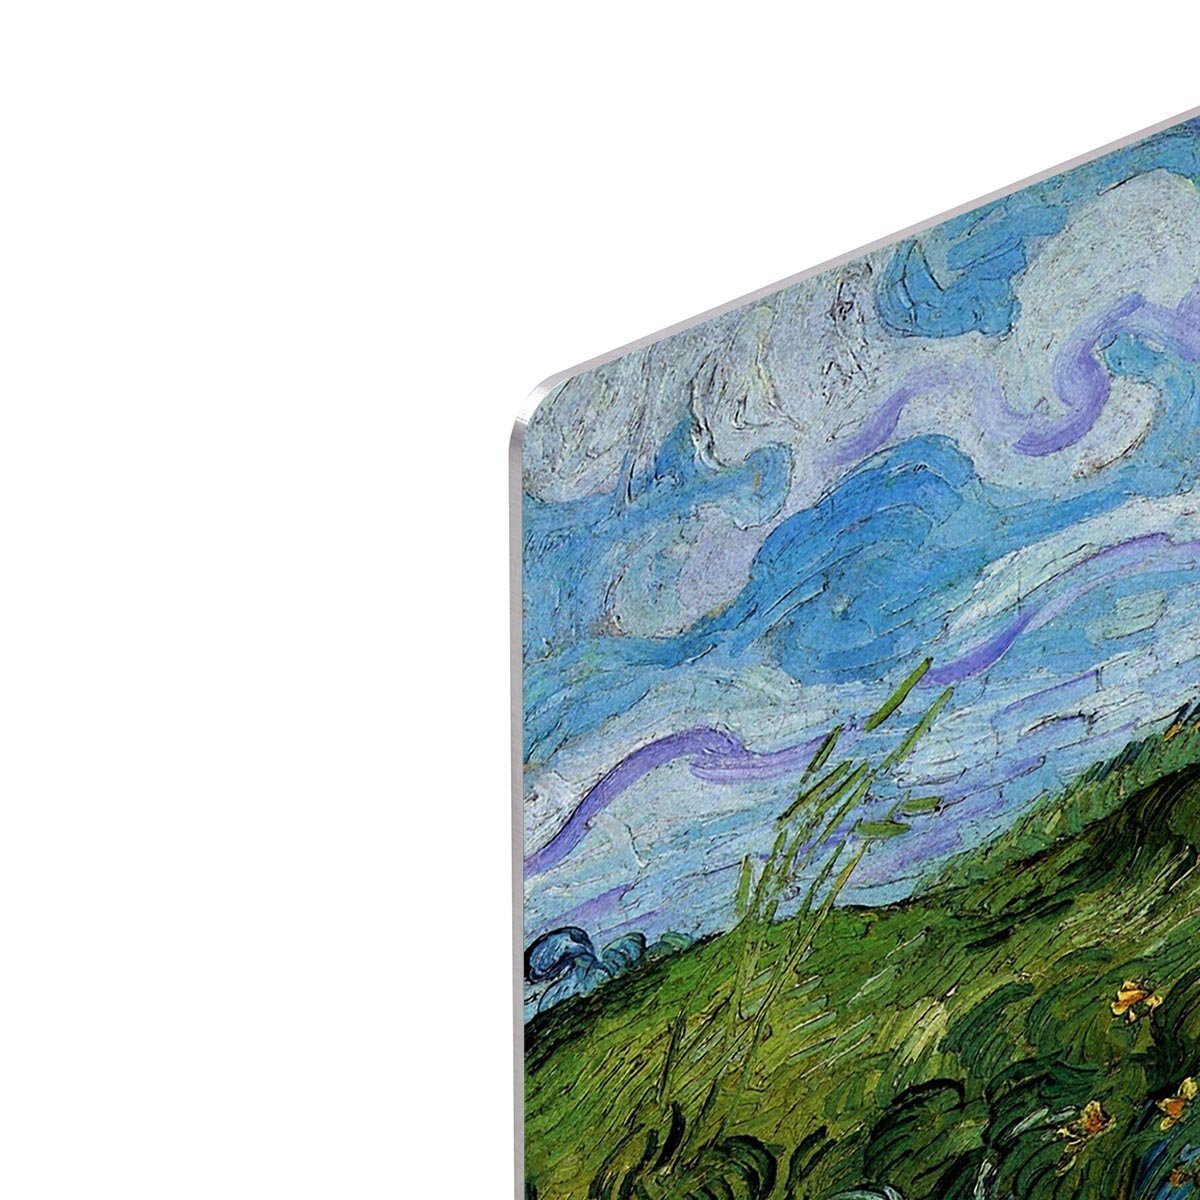 Green Wheat Fields by Van Gogh HD Metal Print